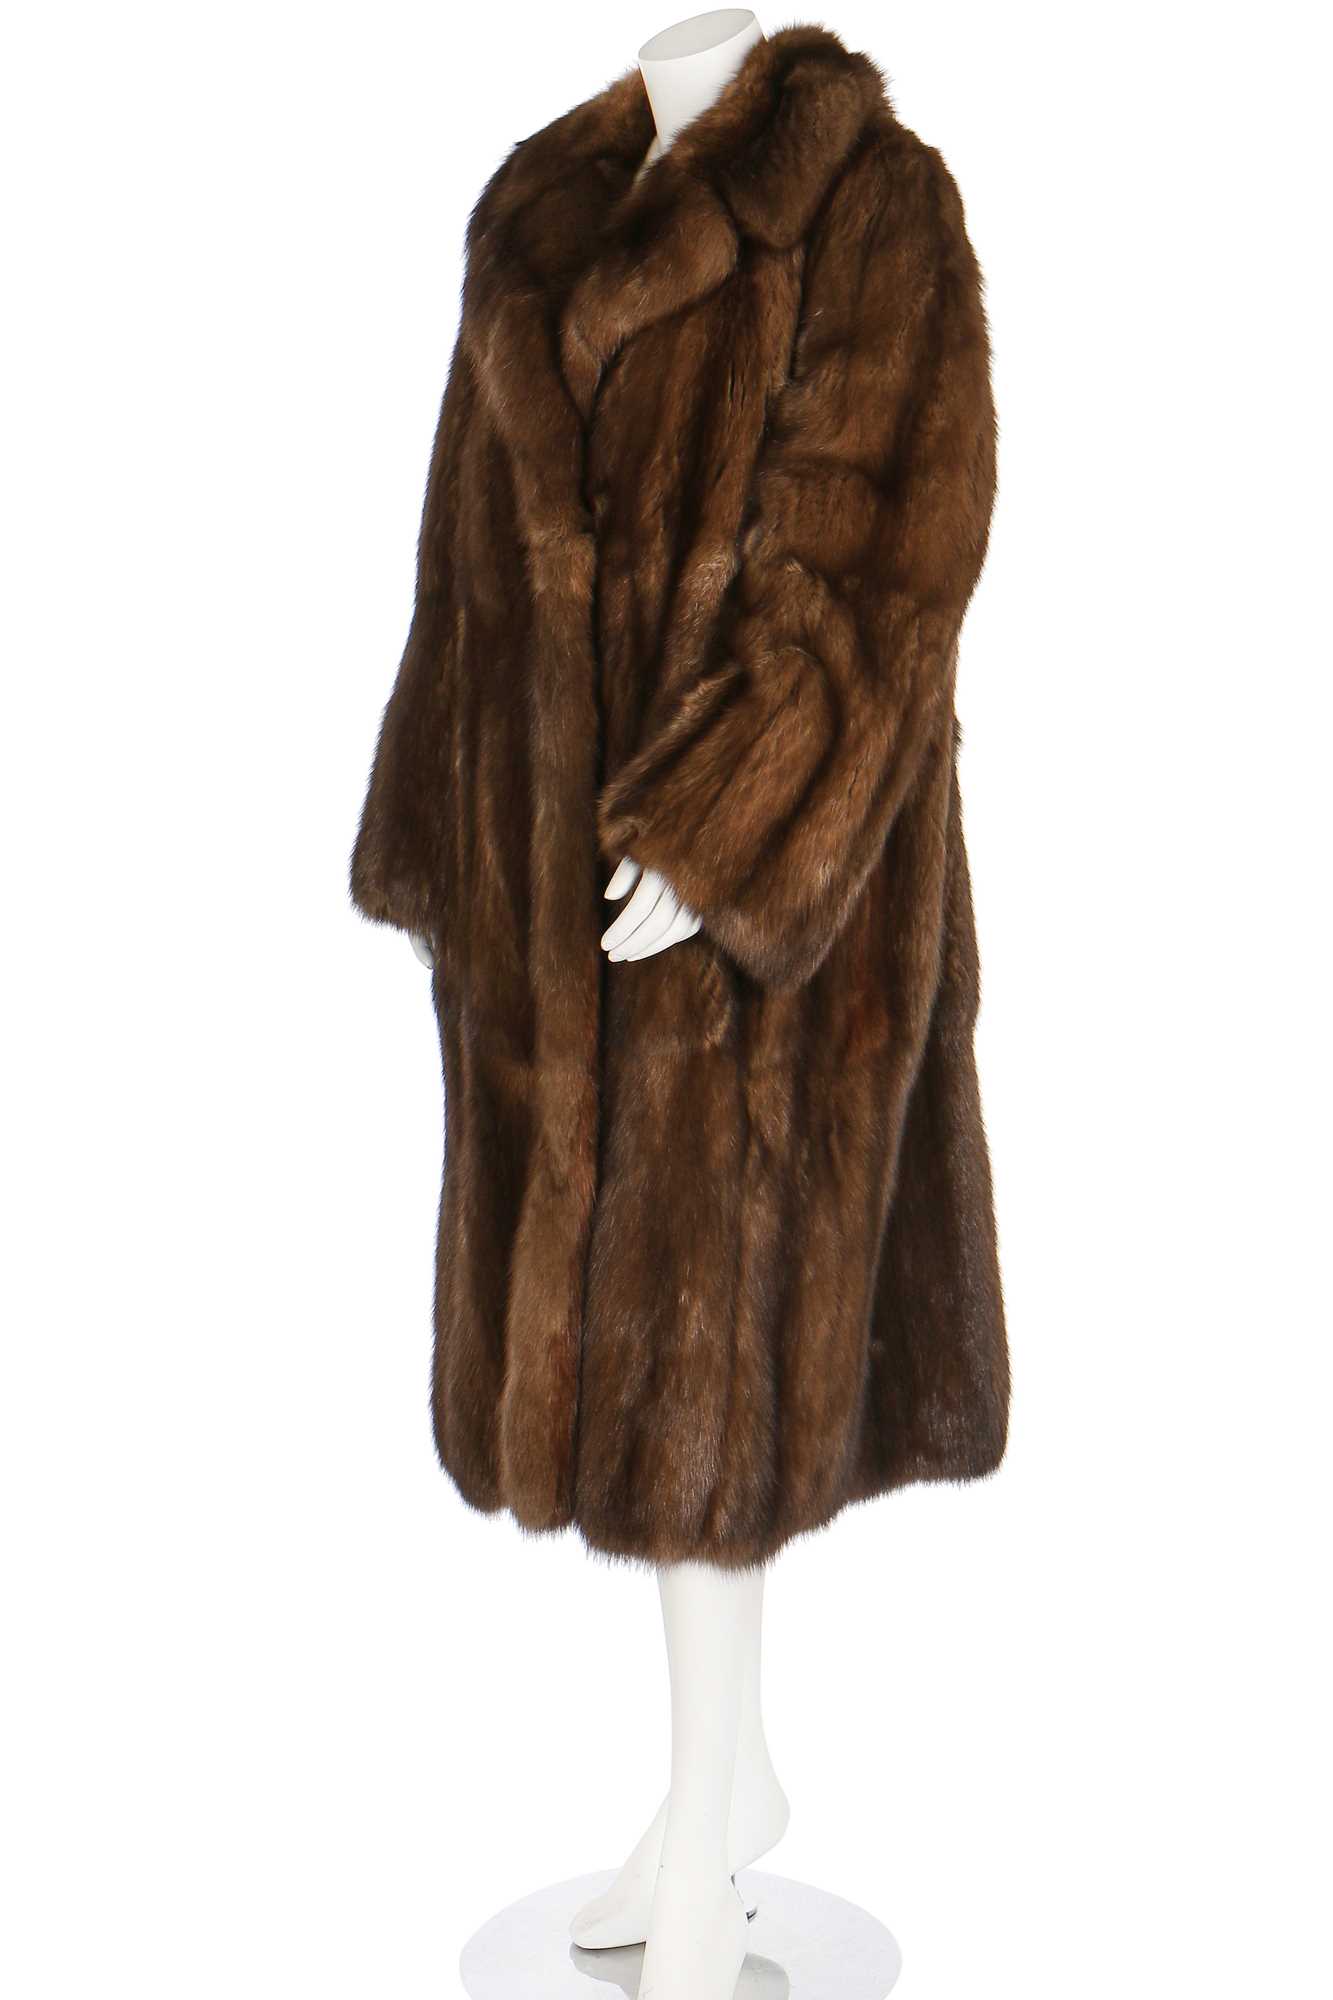 Lot 30 - A sable coat by De Scale, probably 1980s